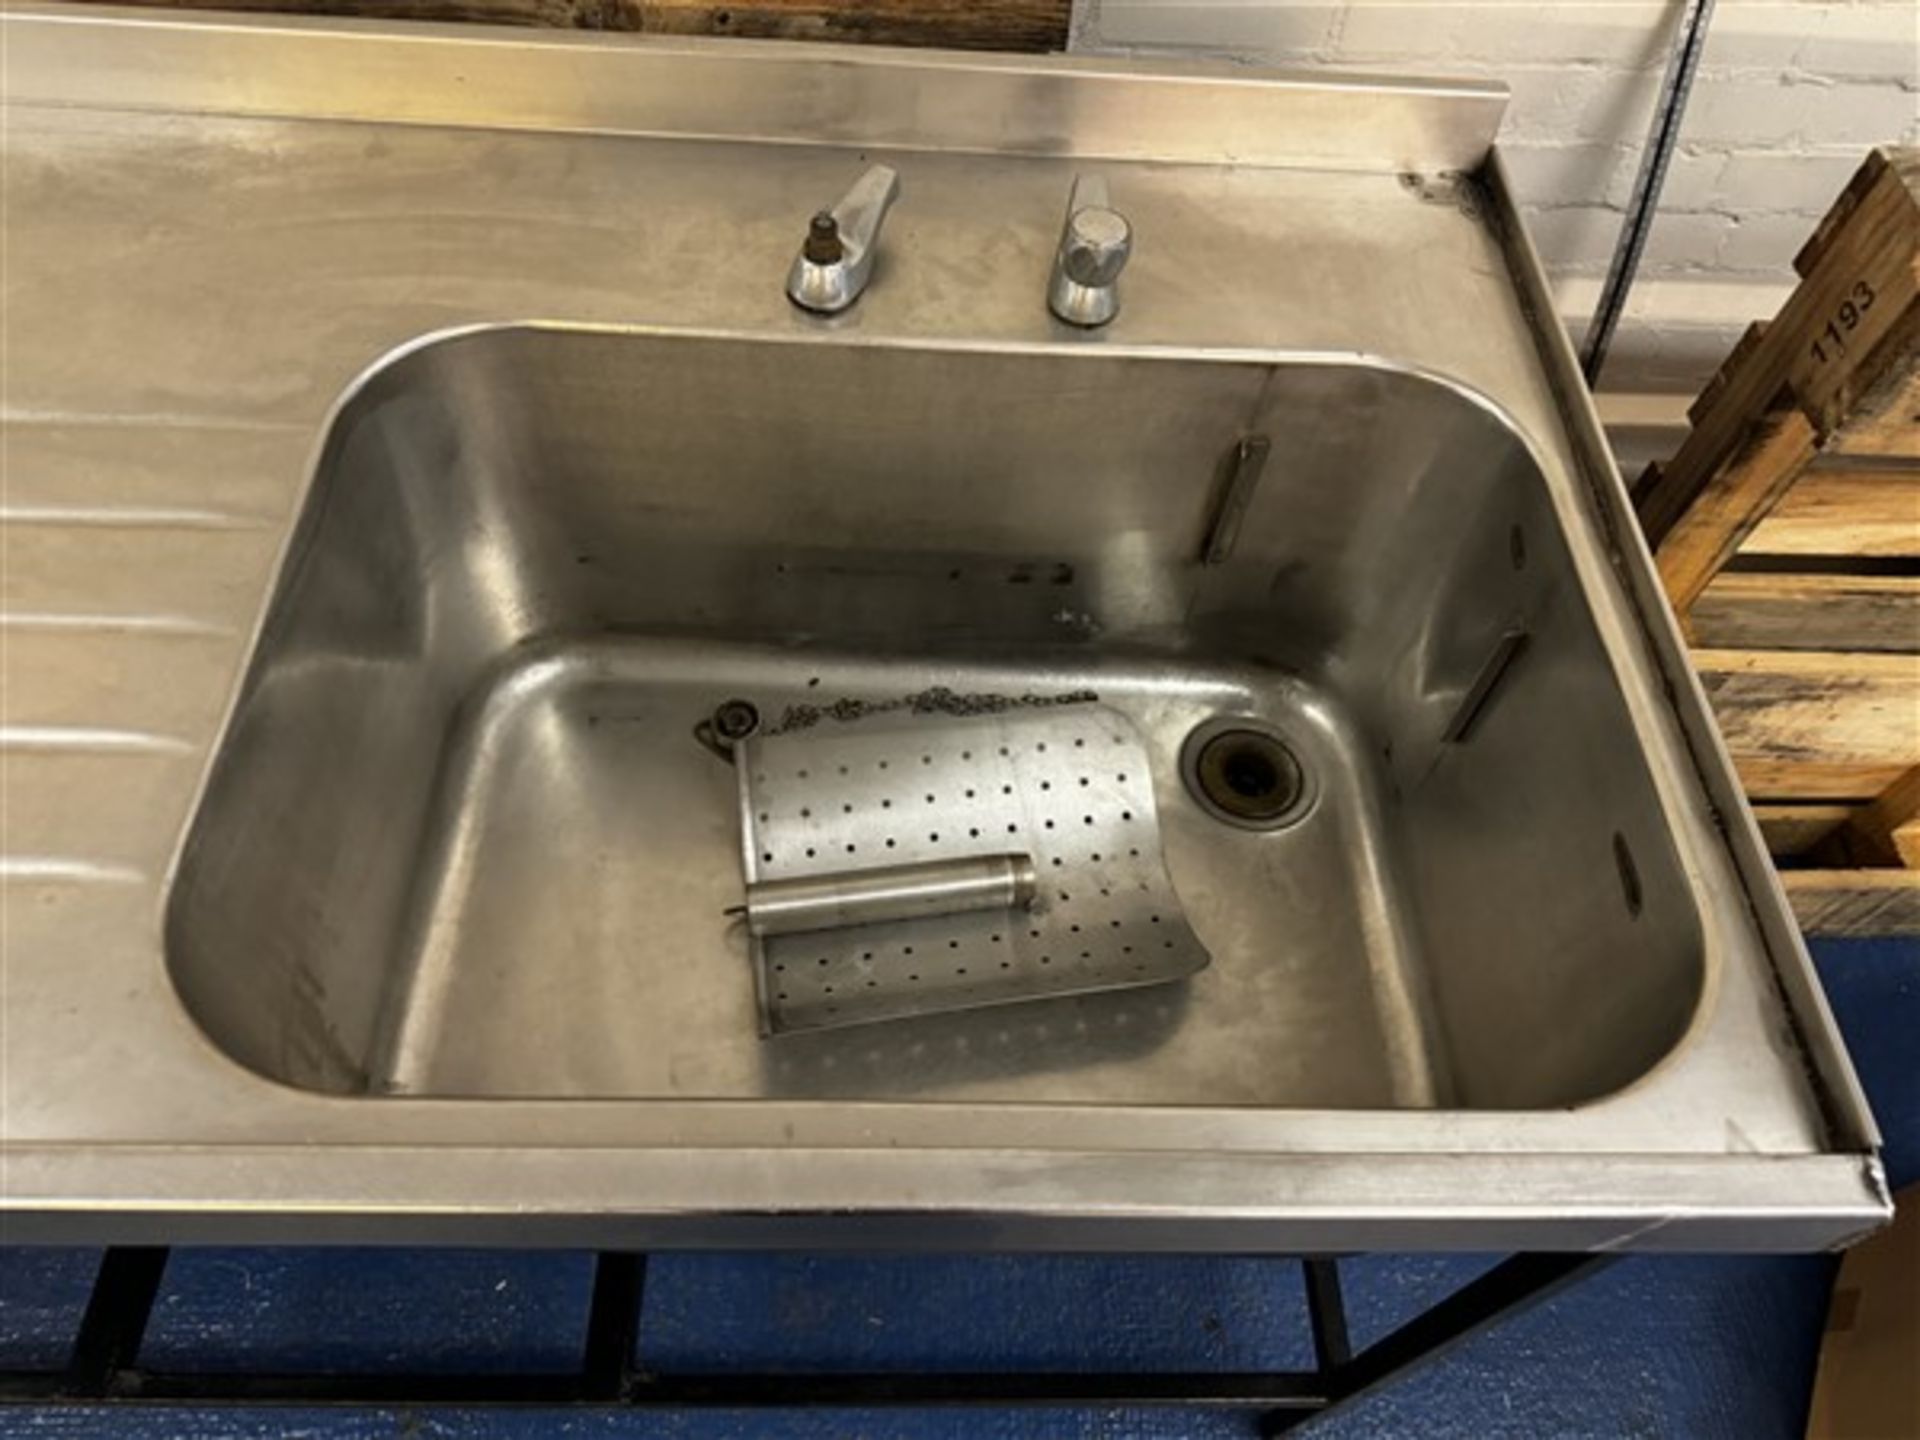 Stainless steel deep binned sink unit, H 94cm x L 1.87m x W 80cm - Image 2 of 3